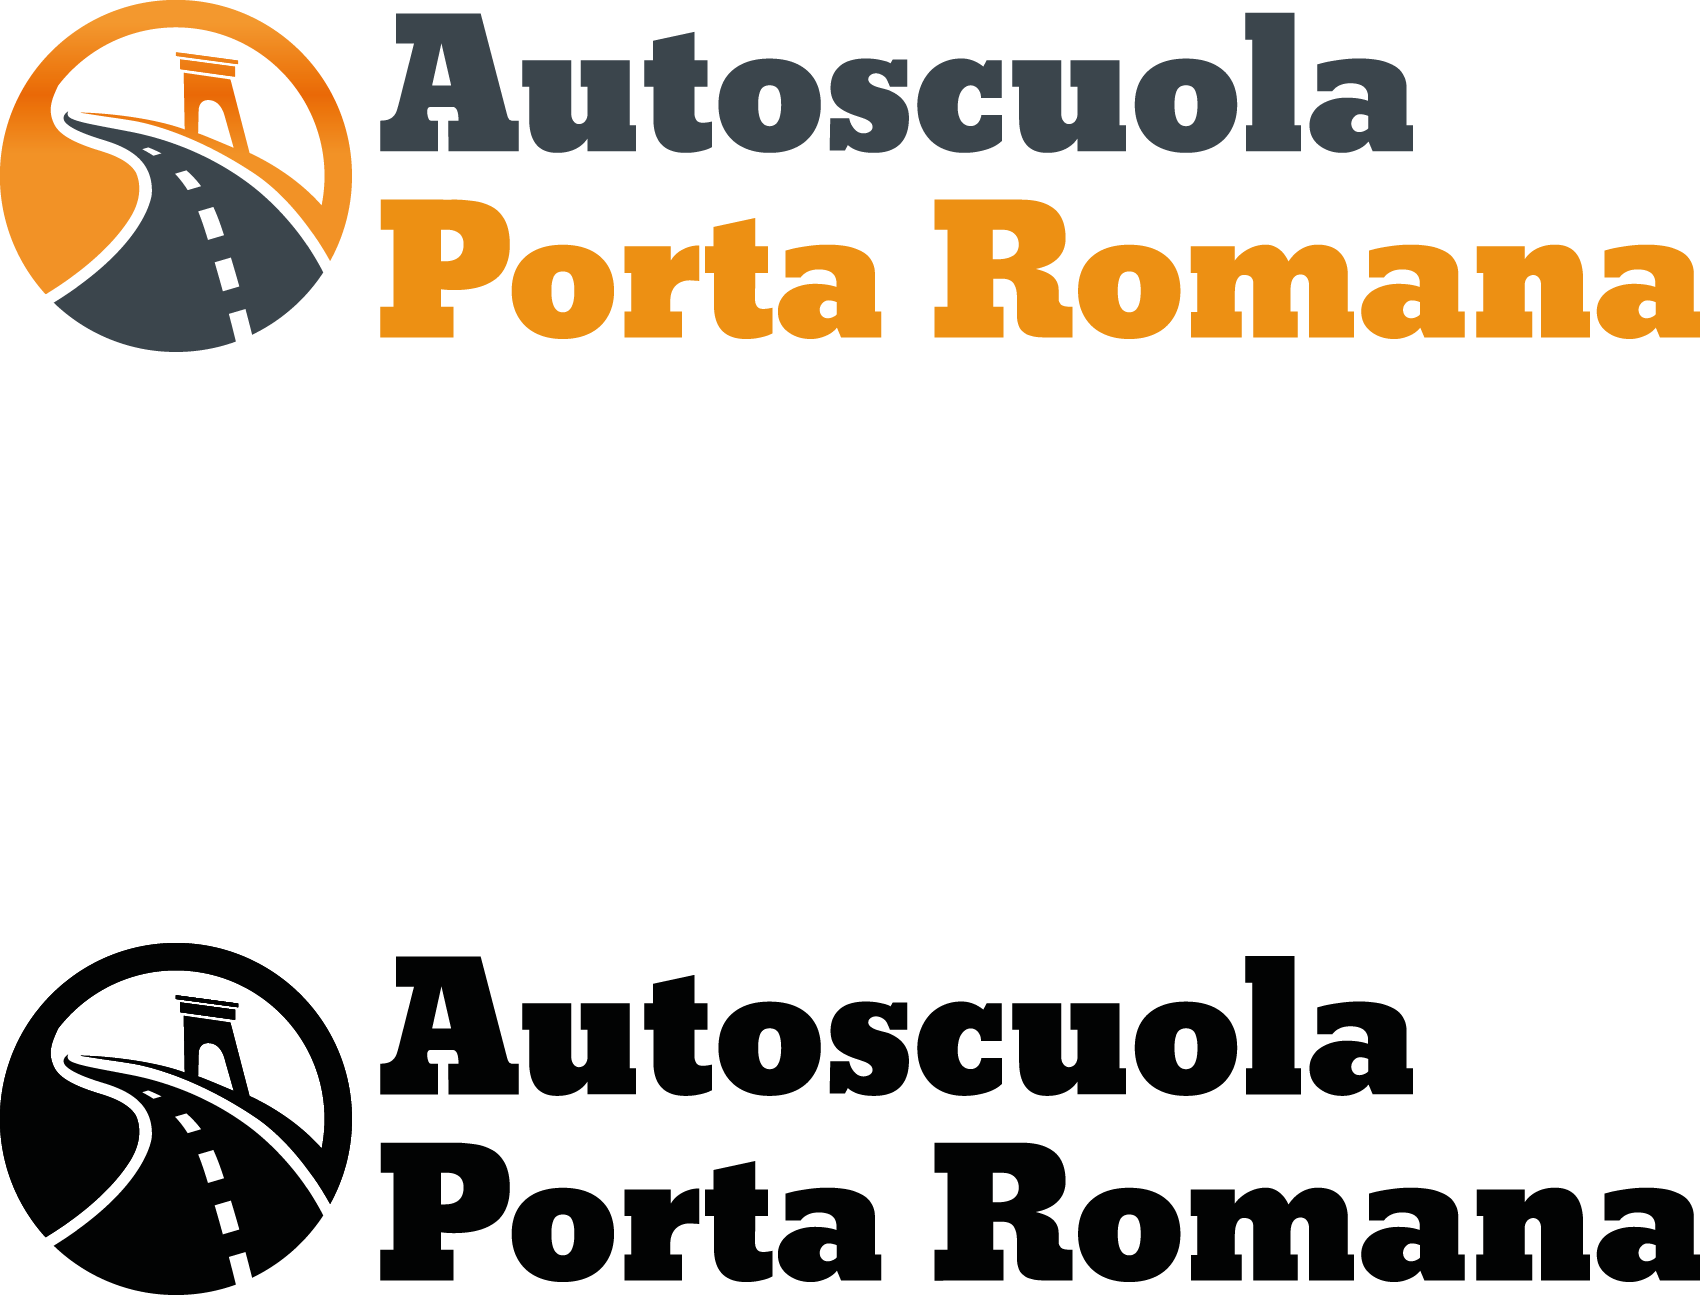 Autoscuola Porta Romana